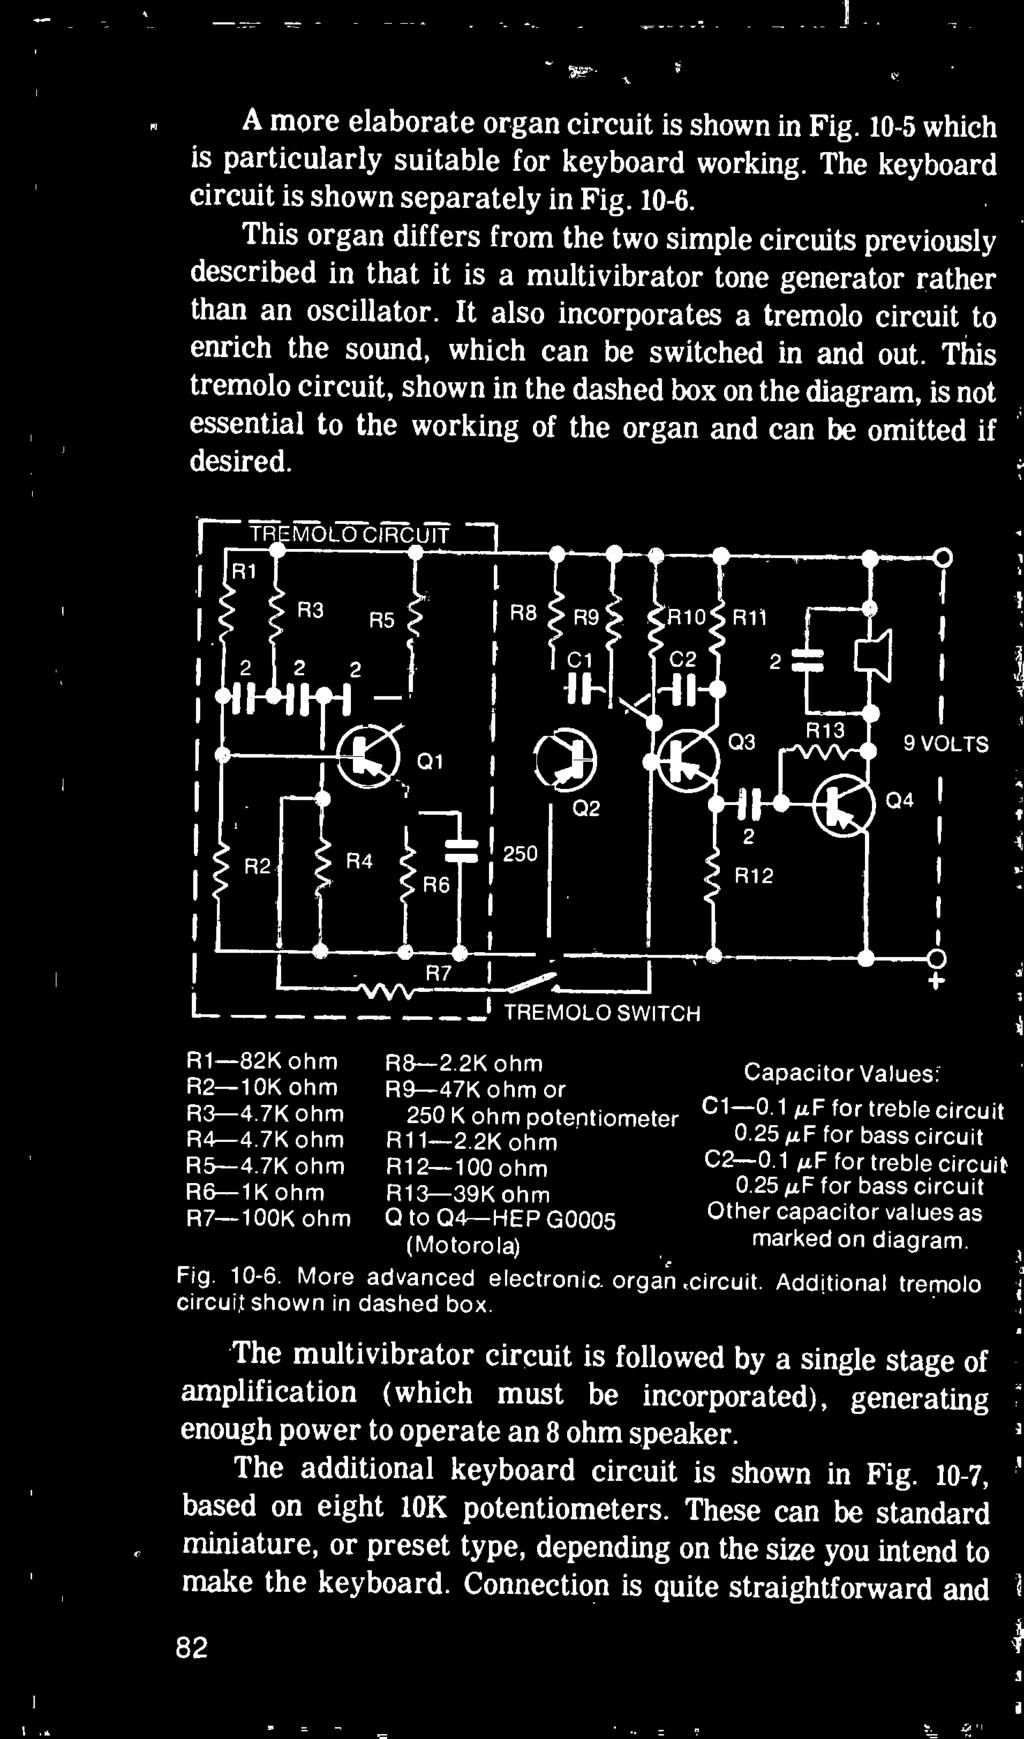 7K ohm R5-4.7K ohm R6-1K ohm R7-100K ohm Fig. 10-6. More circuit shown in _000.17 I I TREMOLO SWITCH R8-2.2K ohm R9-47K ohm or 250 K ohm potentiometer R11-2.